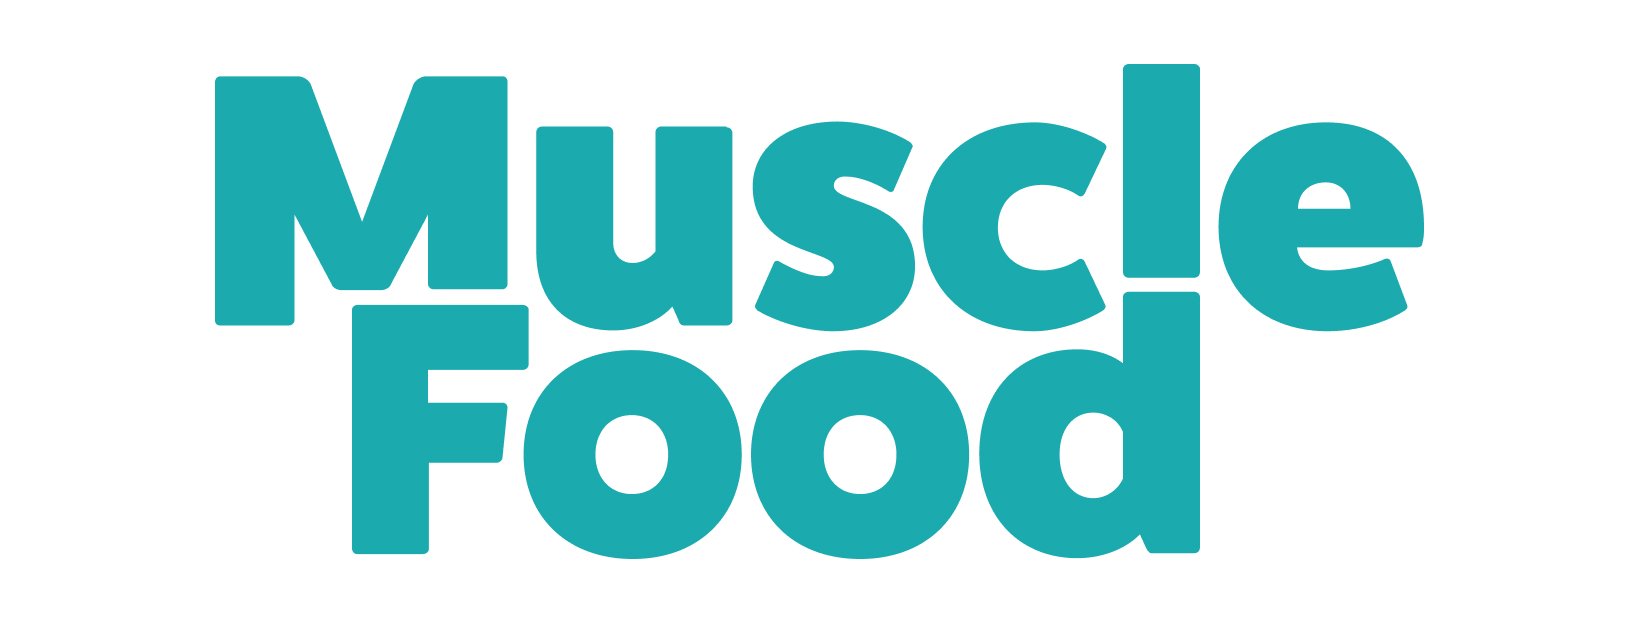 MuscleFood logo